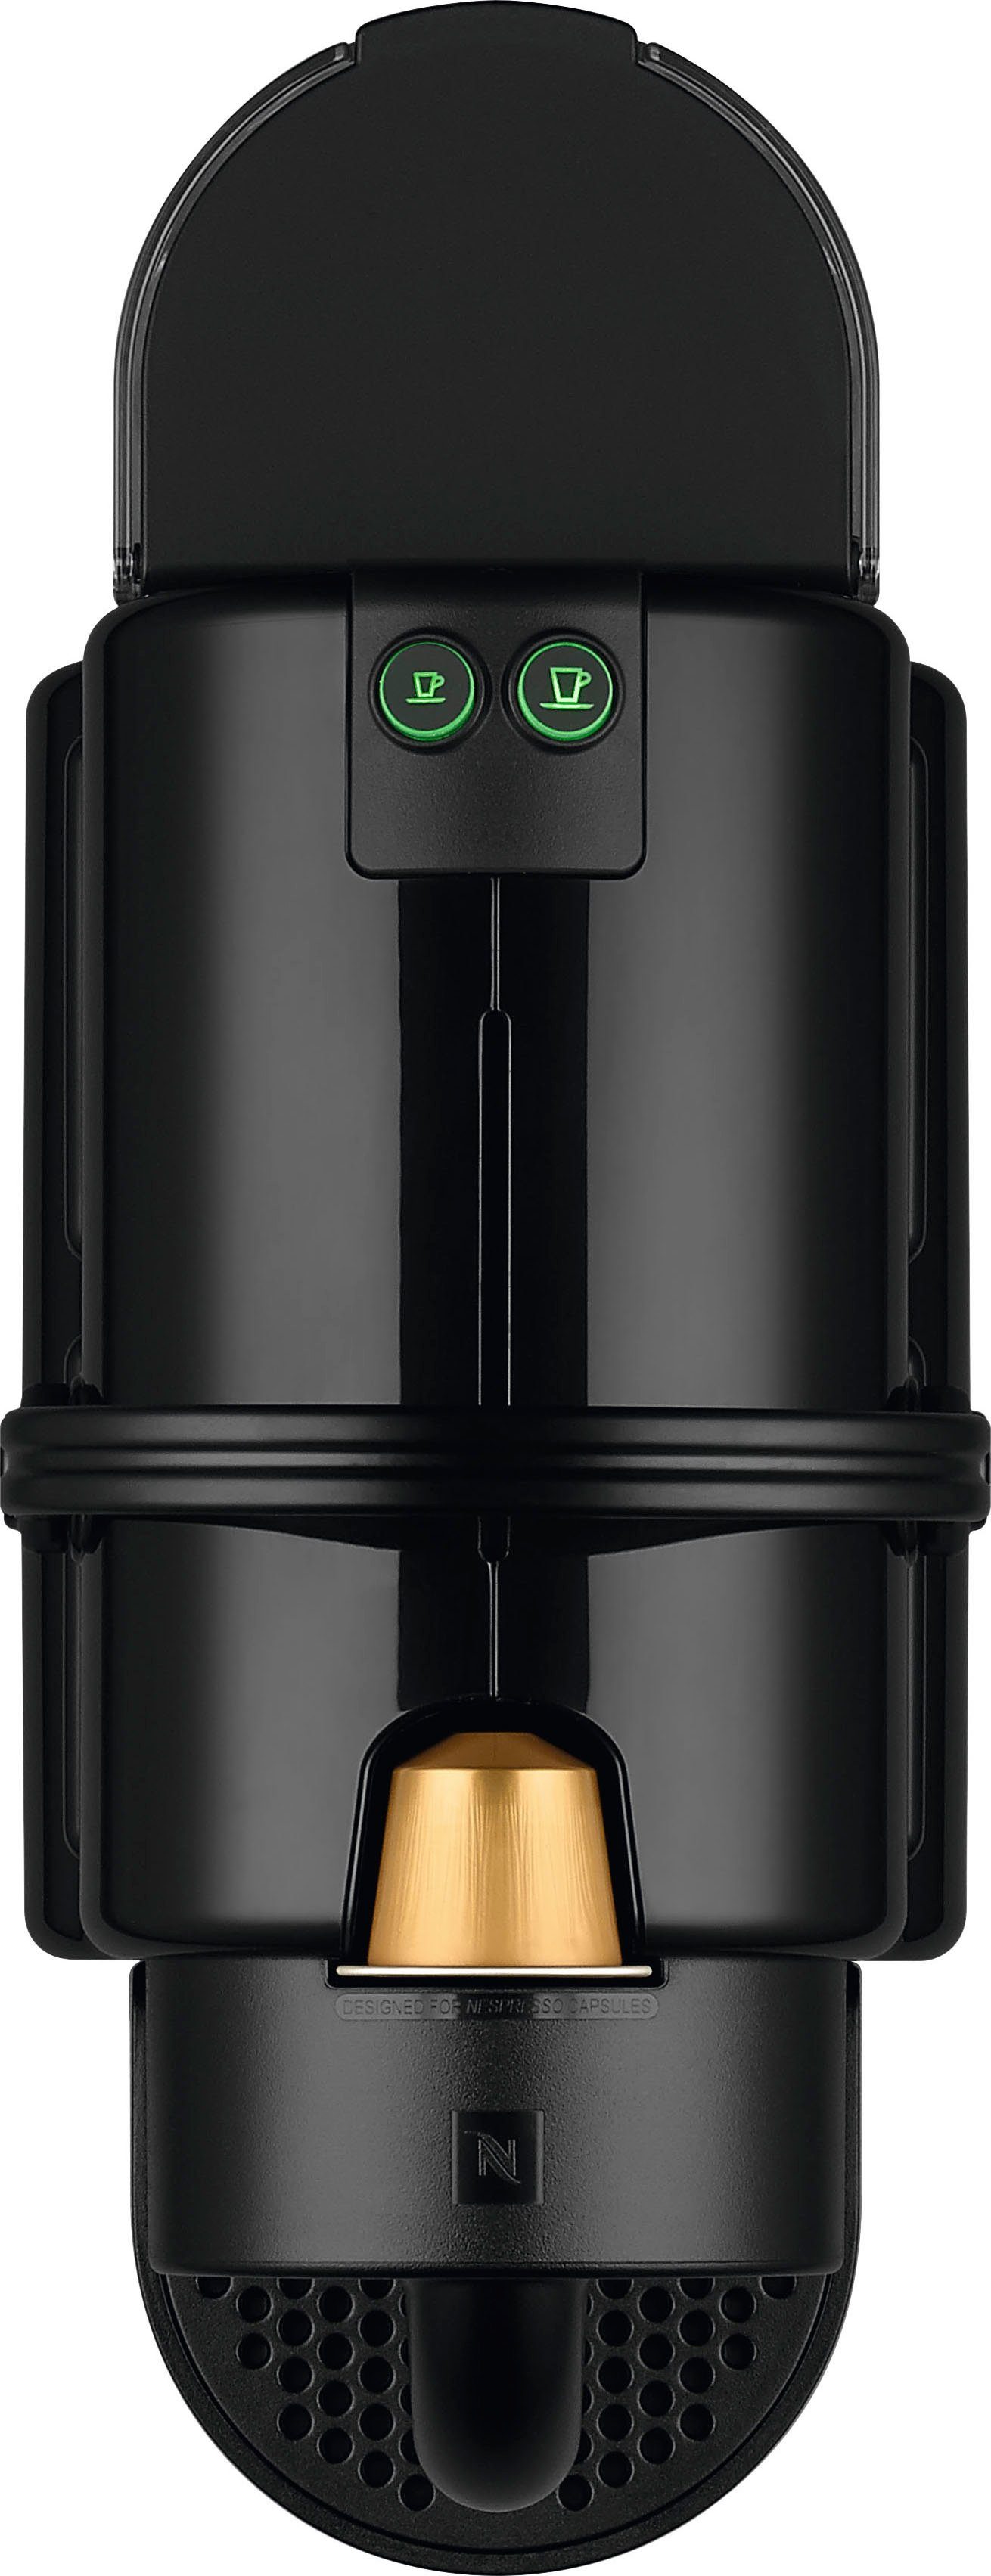 inkl. Kapseln DeLonghi, Kapselmaschine 7 mit Willkommenspaket Nespresso EN Black, Inissia von 80.B